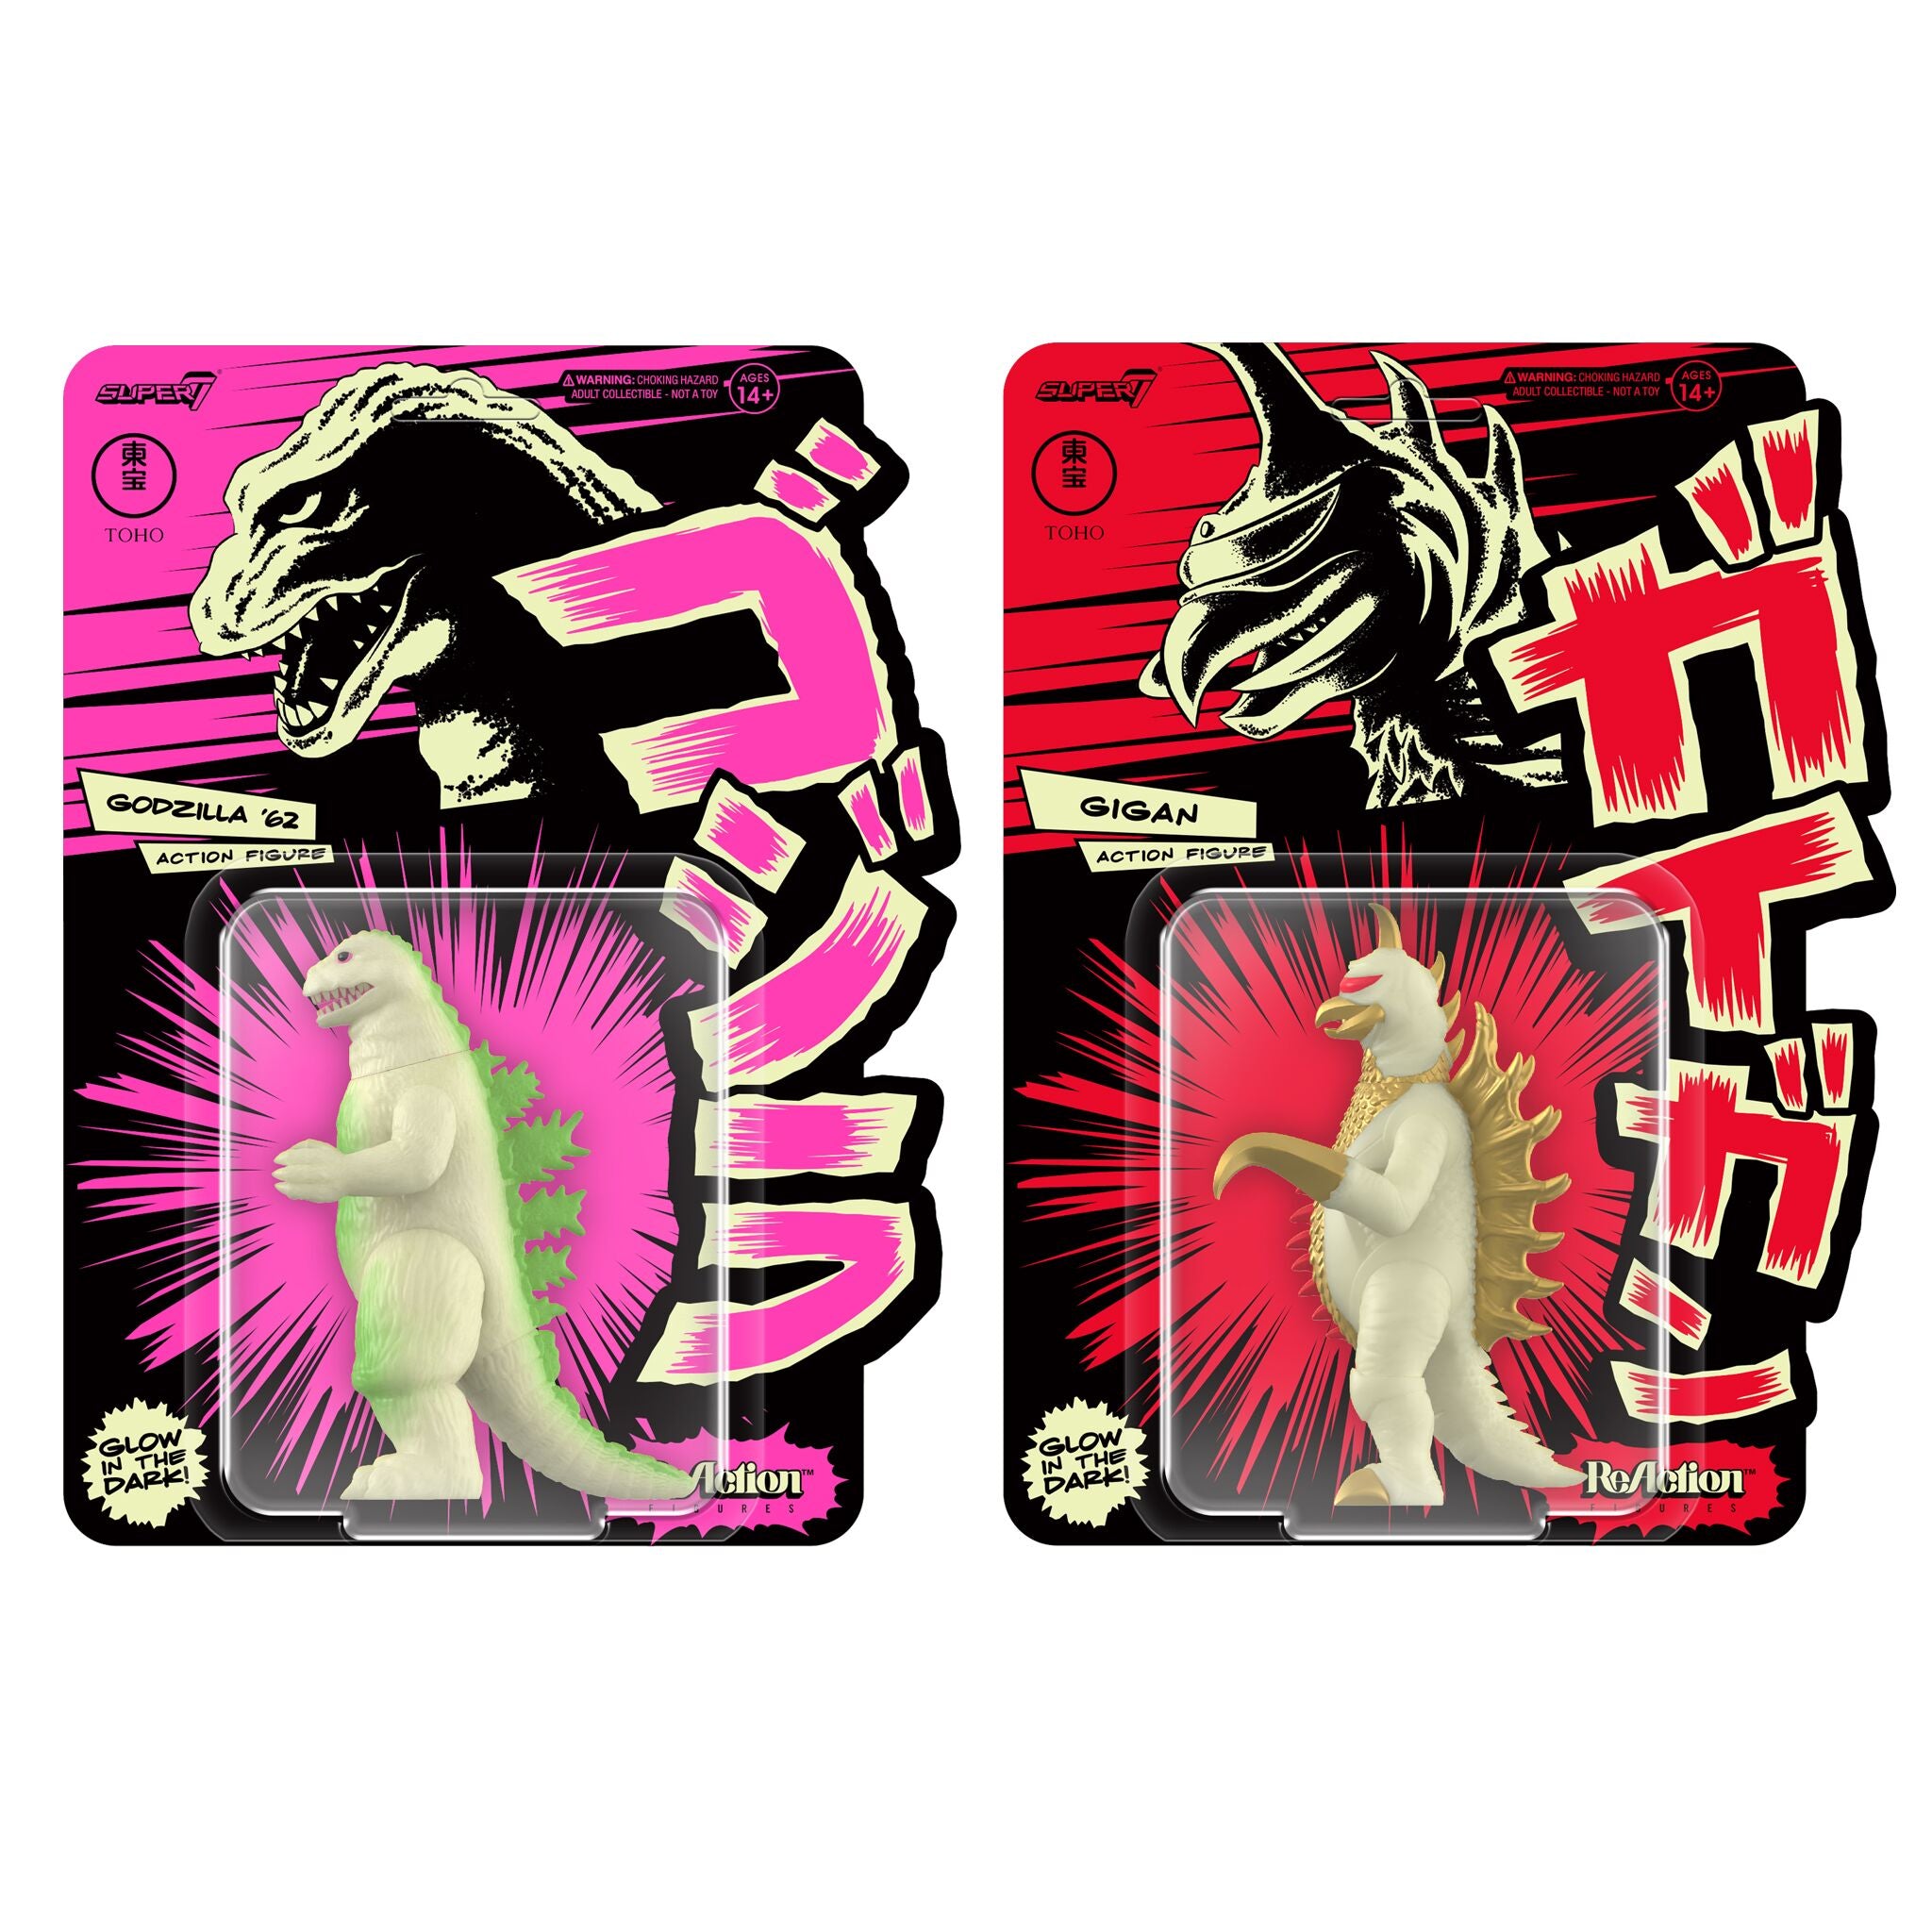 Toho ReAction Figures Wave 4 - Gigan and Godzilla '62 (Glow)